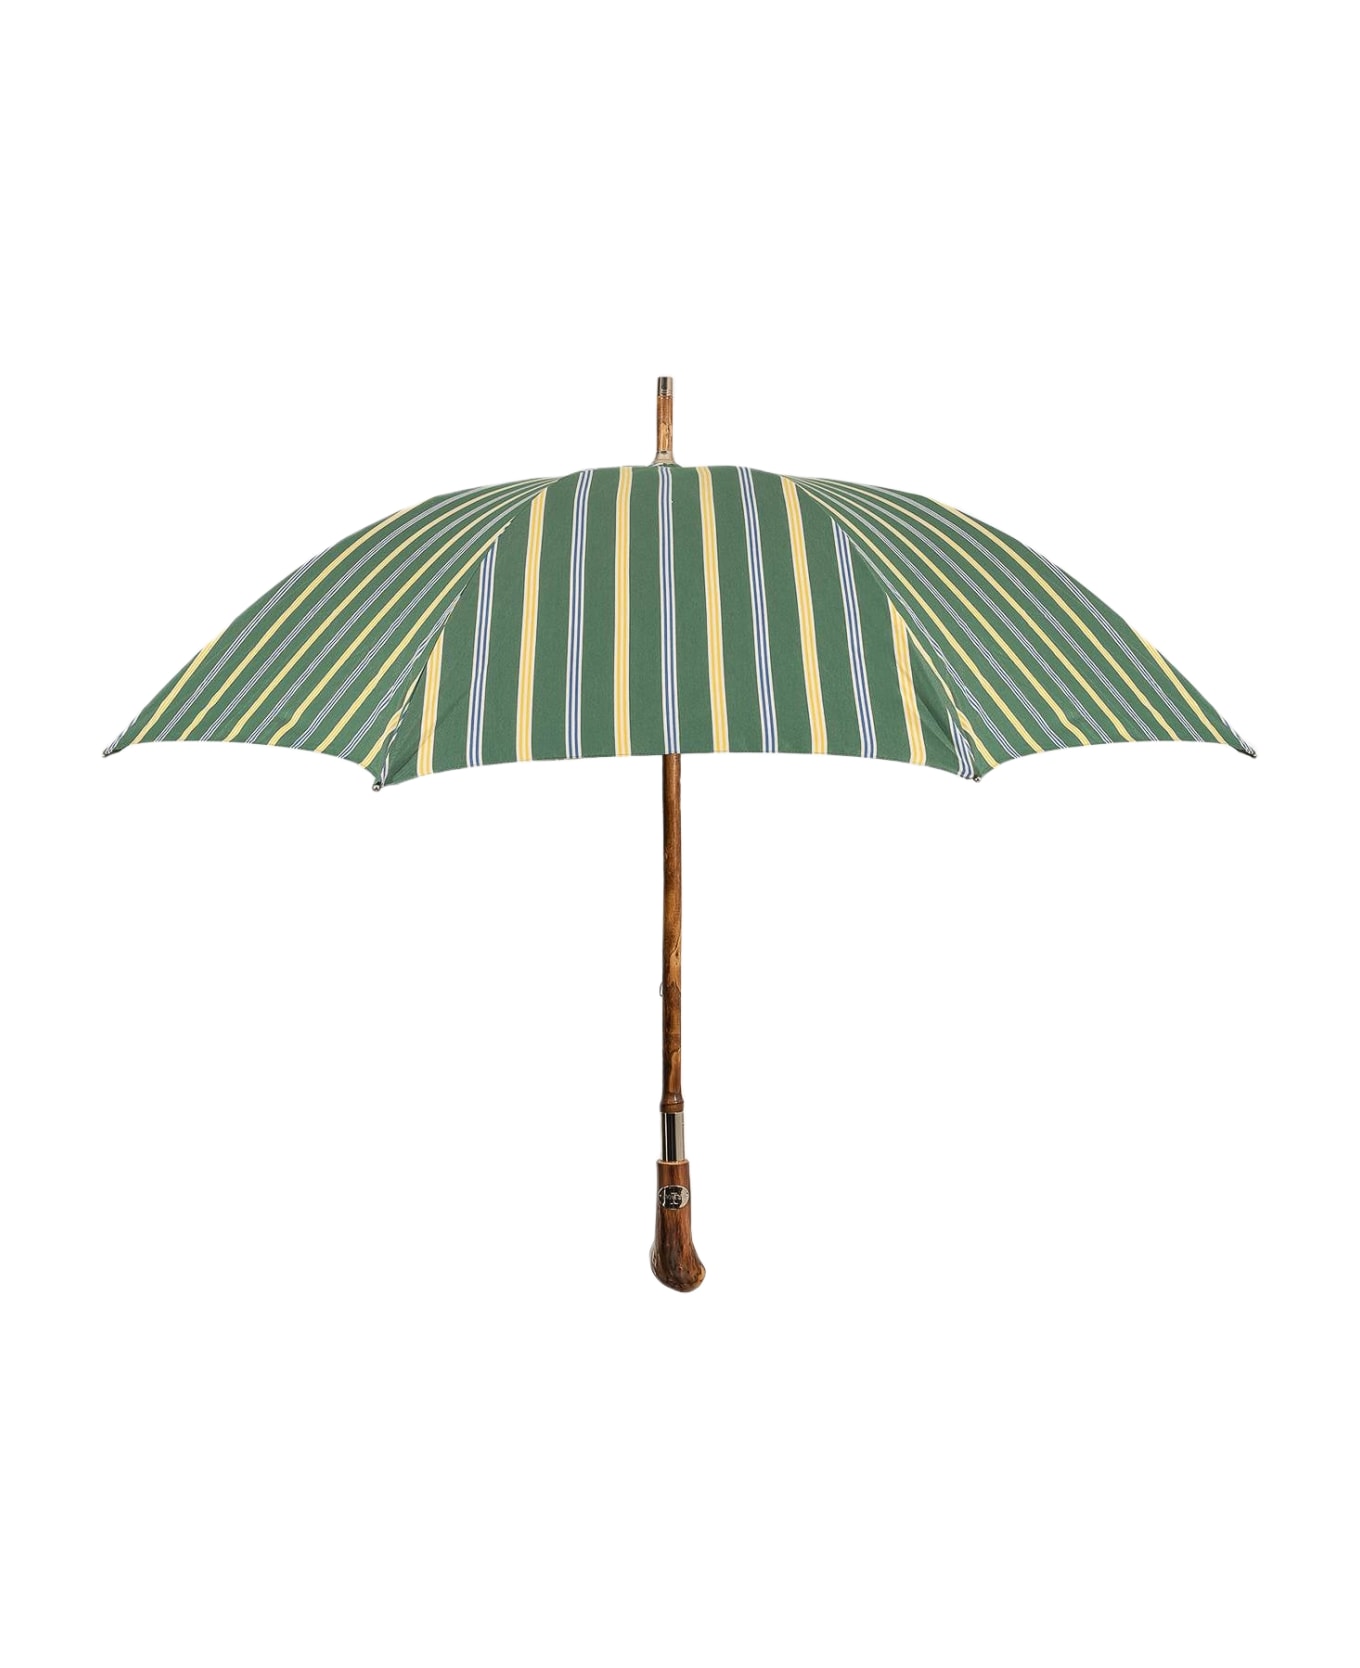 Larusmiani Umbrella 'pic Nic' Umbrella - Green